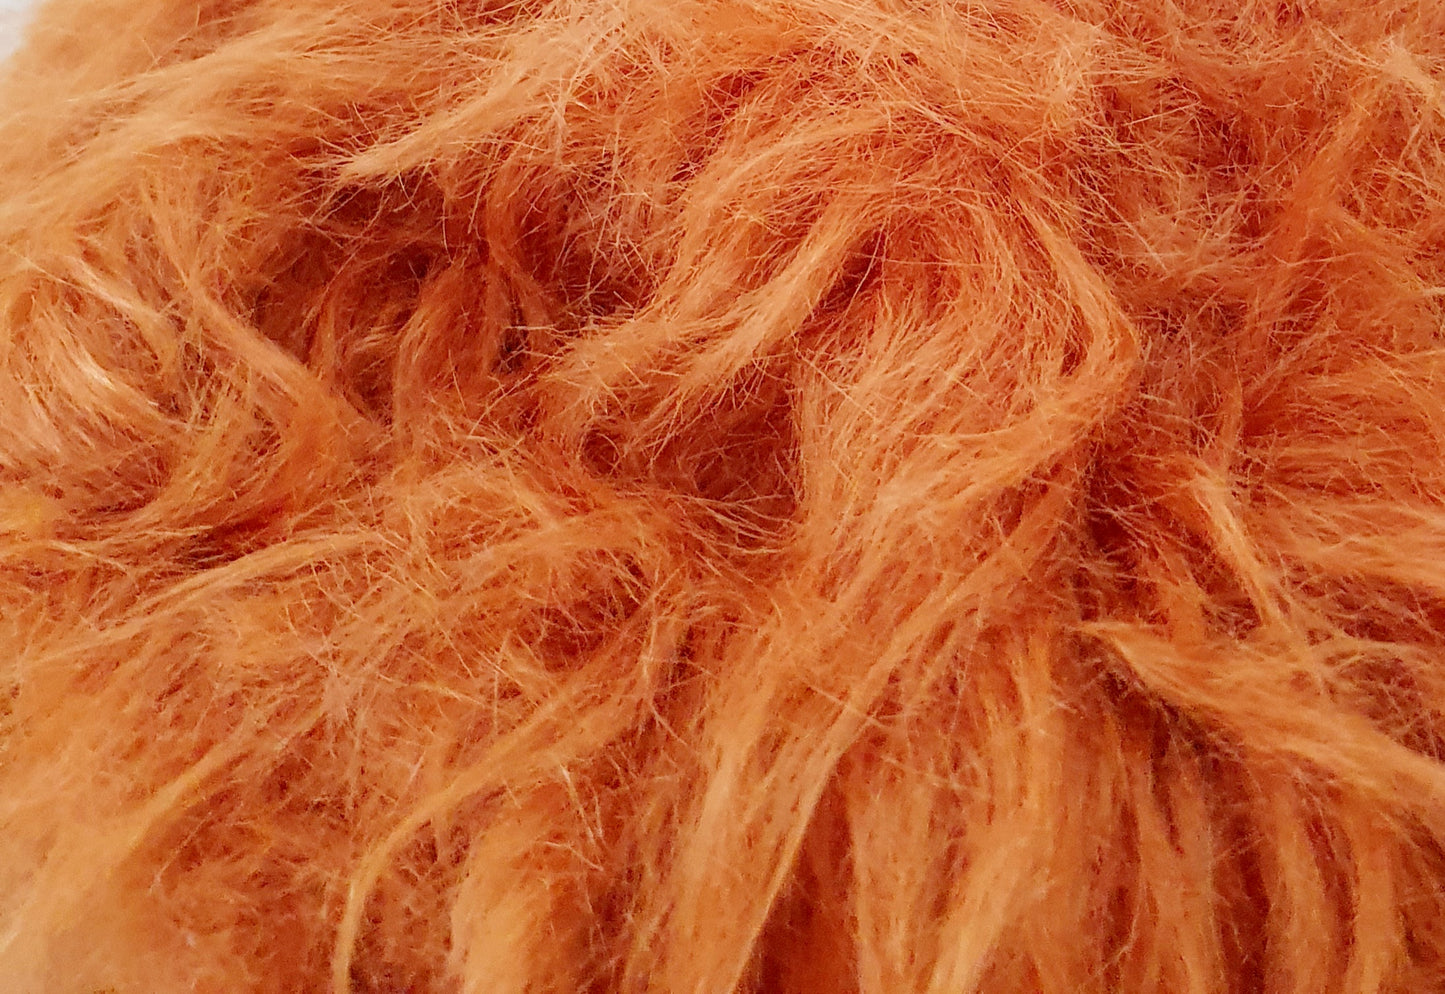 FAUX FUR - ORANGUTAN - Fake Animal Hair Baby Nappy Cover, Size 0 (6-12 months)